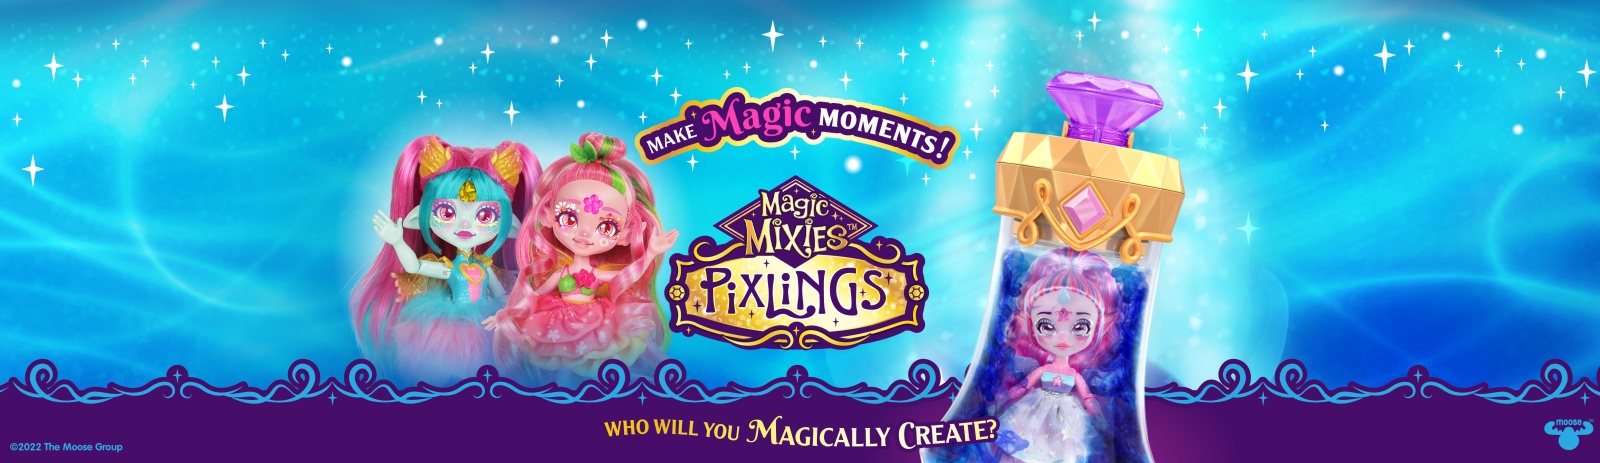 Magic Mixies Pixlings - Faye The Fairy Pixling